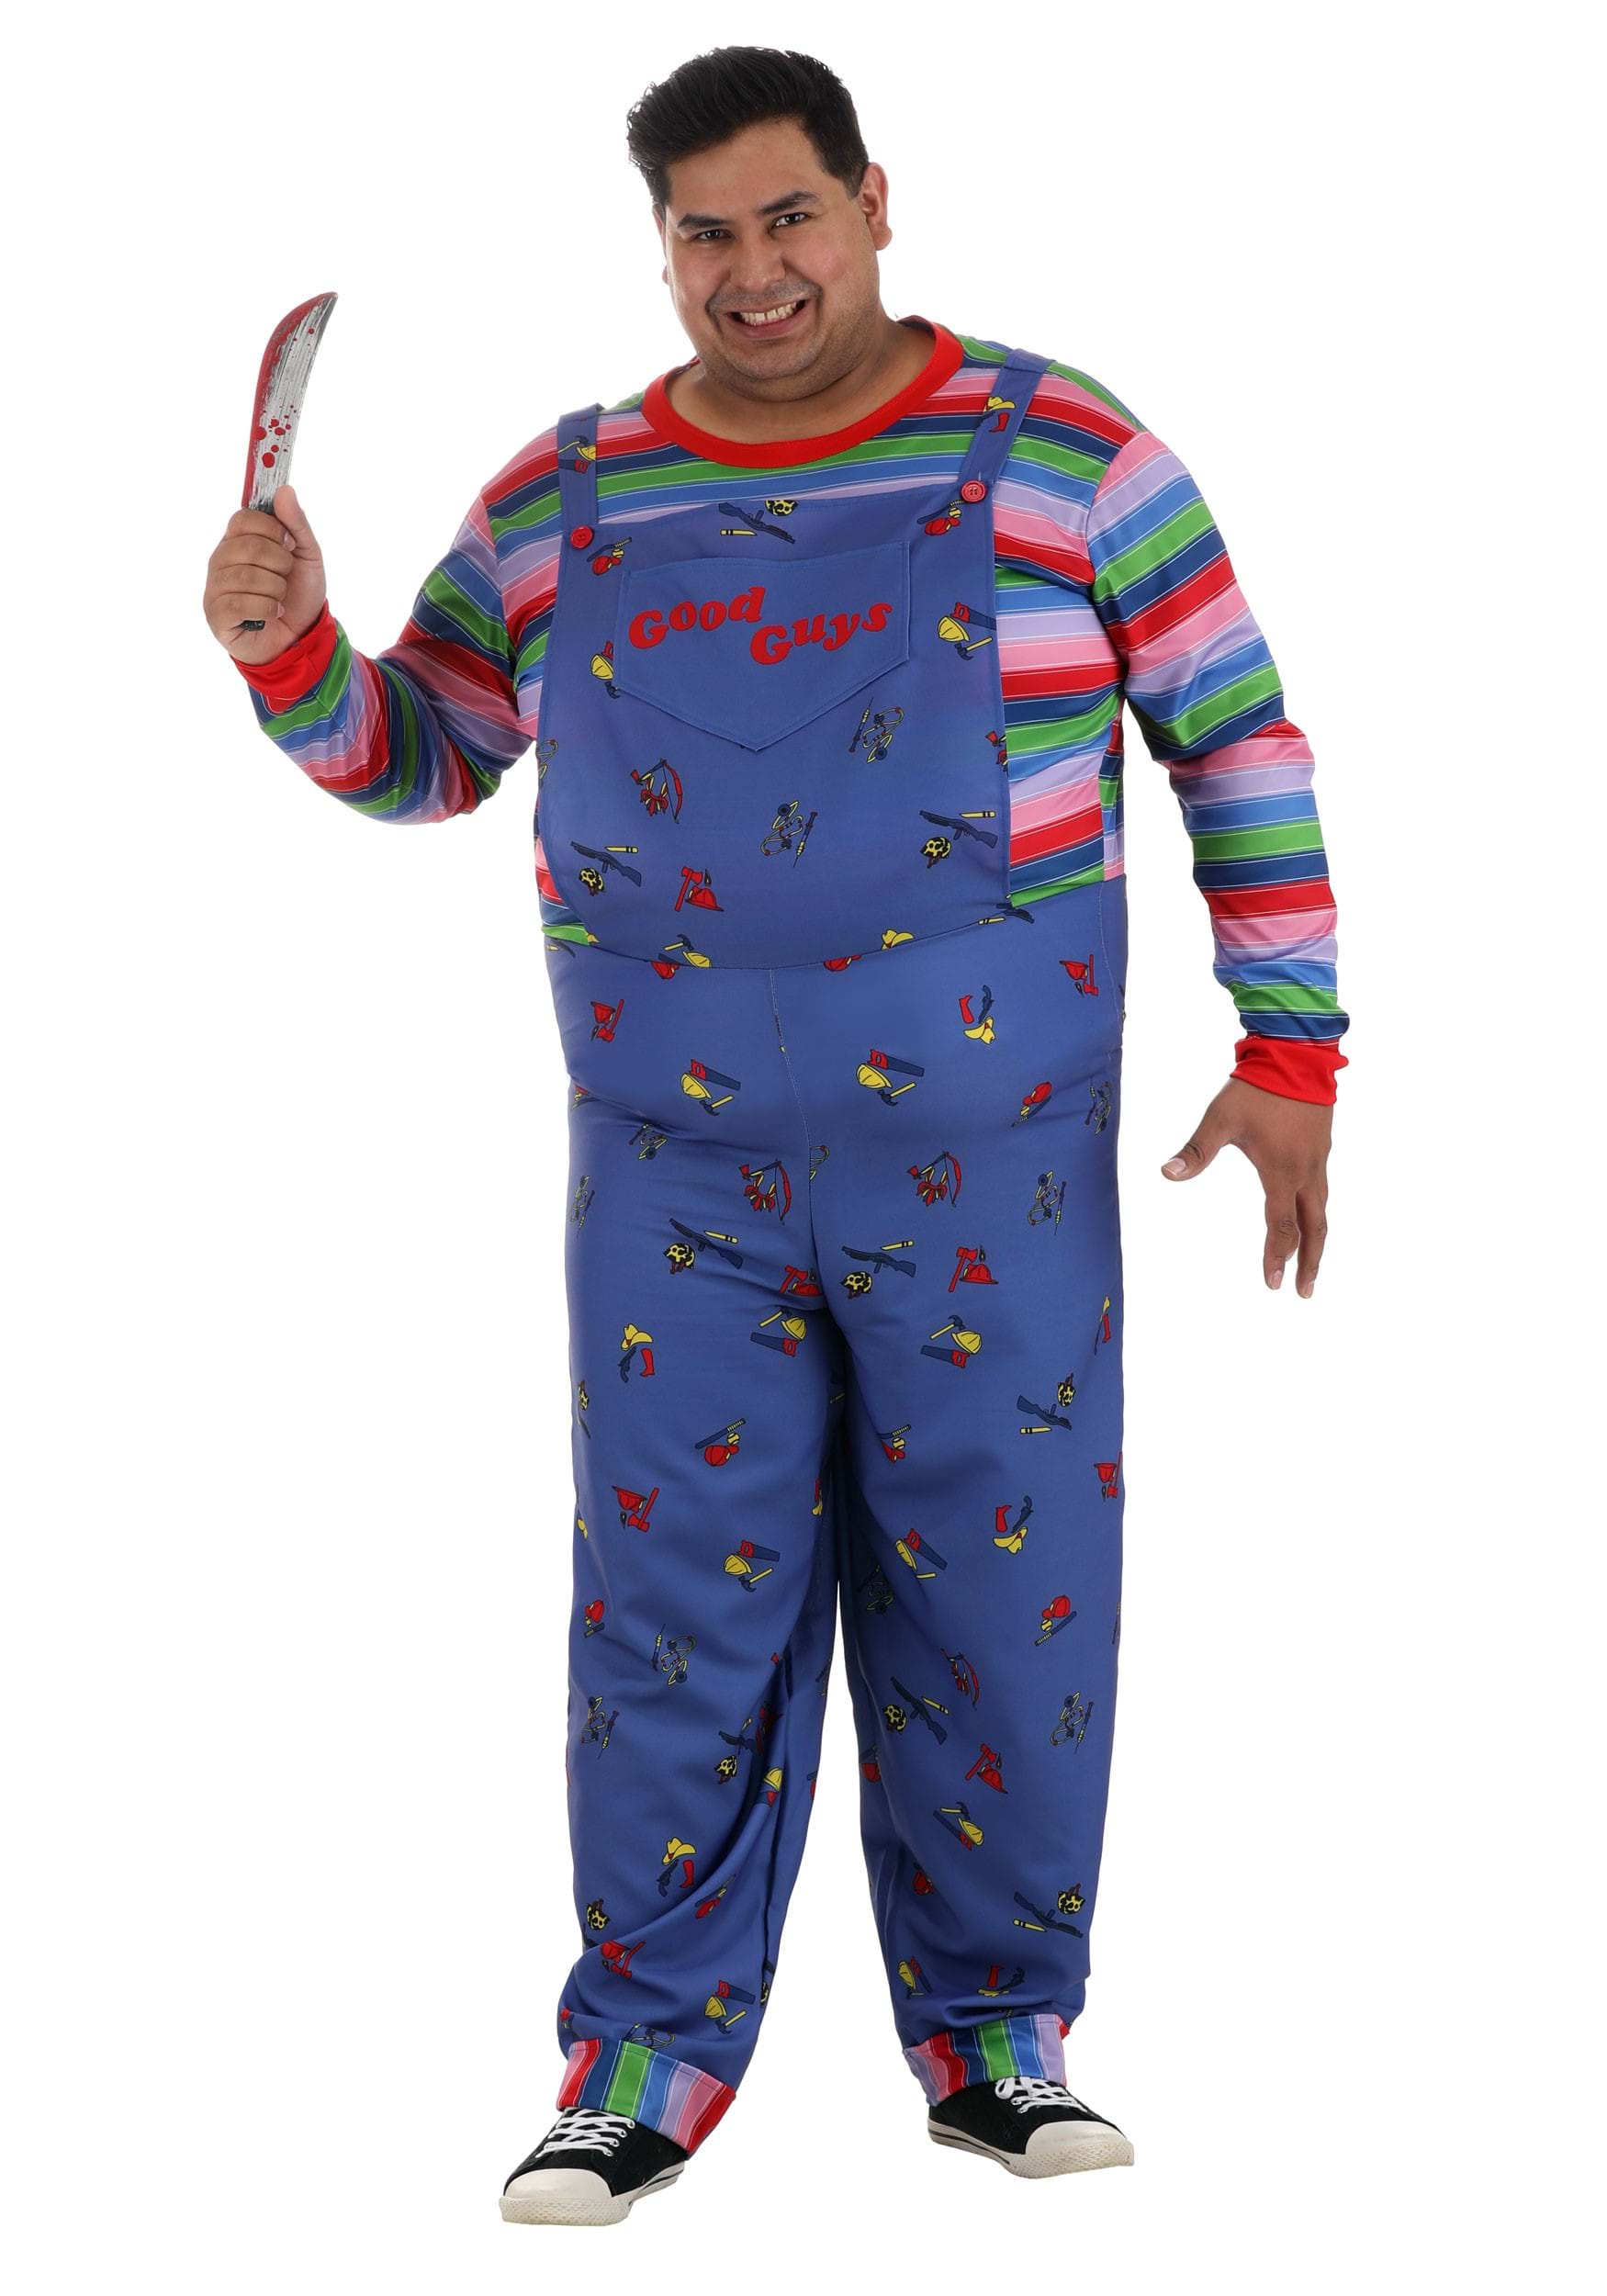 Plus Size Men Child's Play Chucky Costume